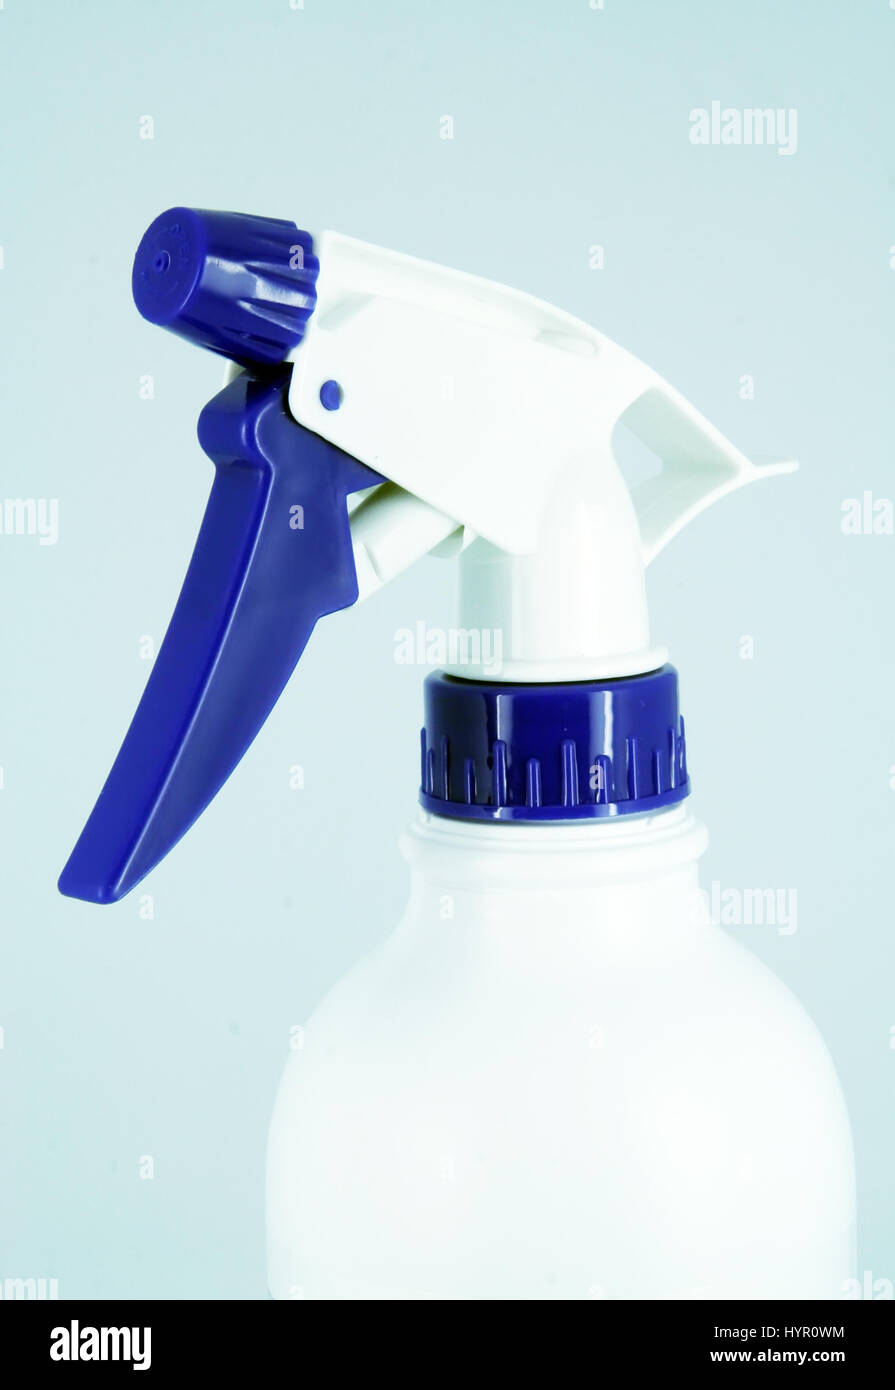 Watering sprayer. Blue and white plastic bottle sprayer. Stock Photo